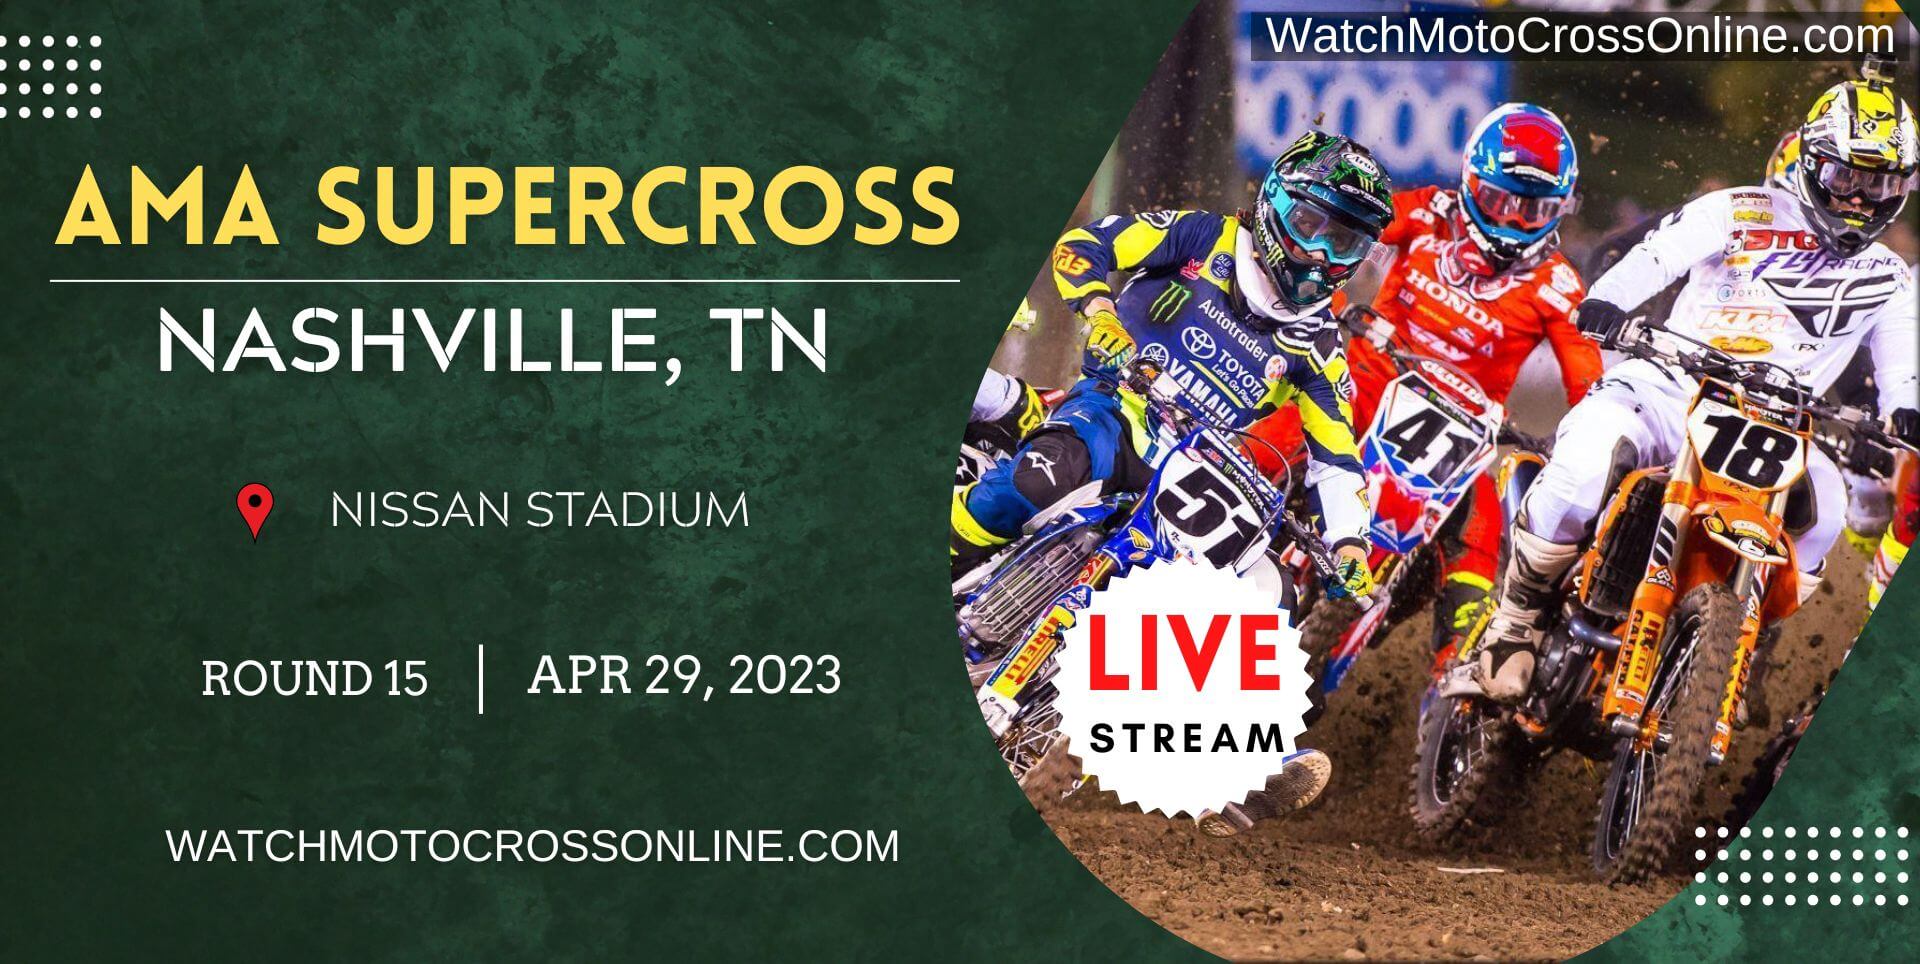 AMA Supercross Nashville Live Stream 2023 | Round 15